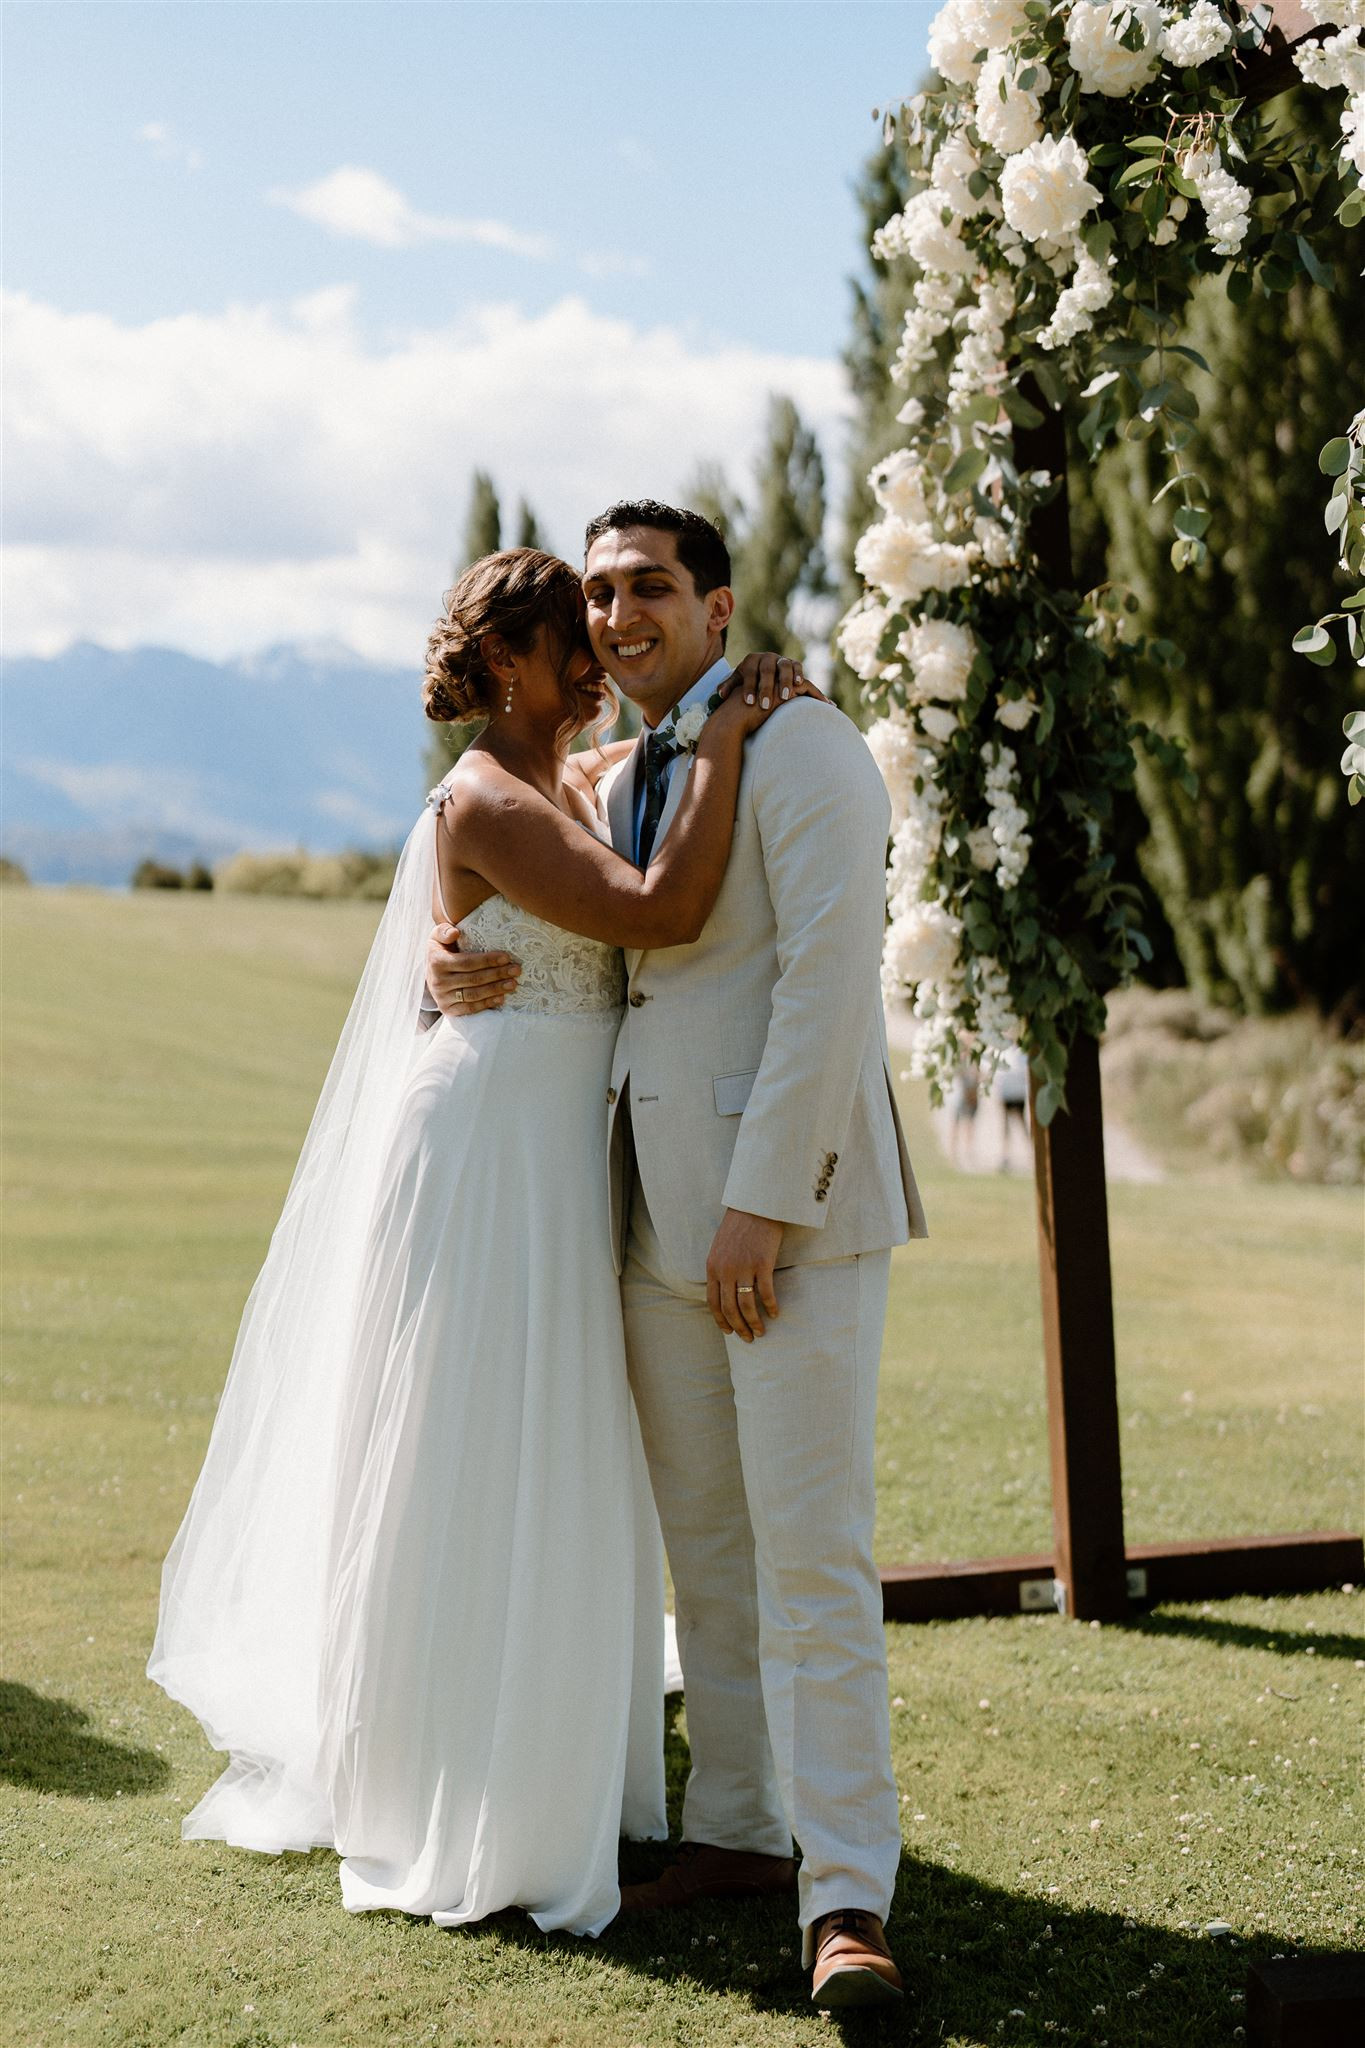 Experience the wonder of New Zealand elopements at Edgewater Lake Wānaka